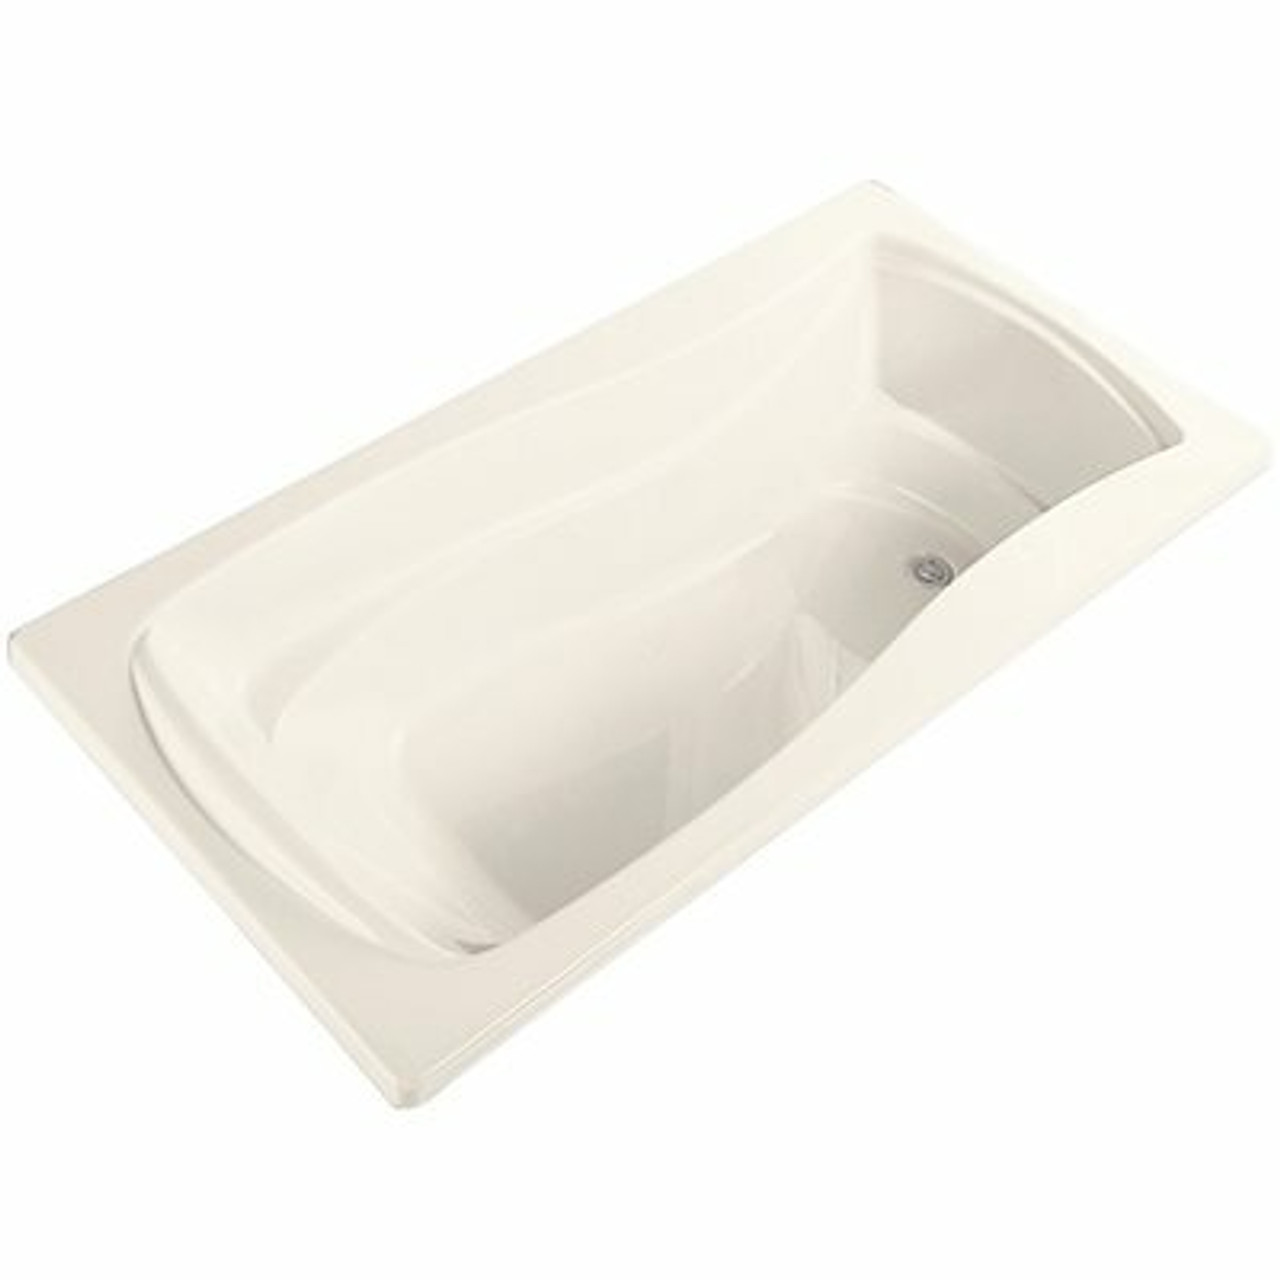 Kohler Mariposa Reversible Drain 60 In. Acrylic Rectangular Drop-In Bathtub In White